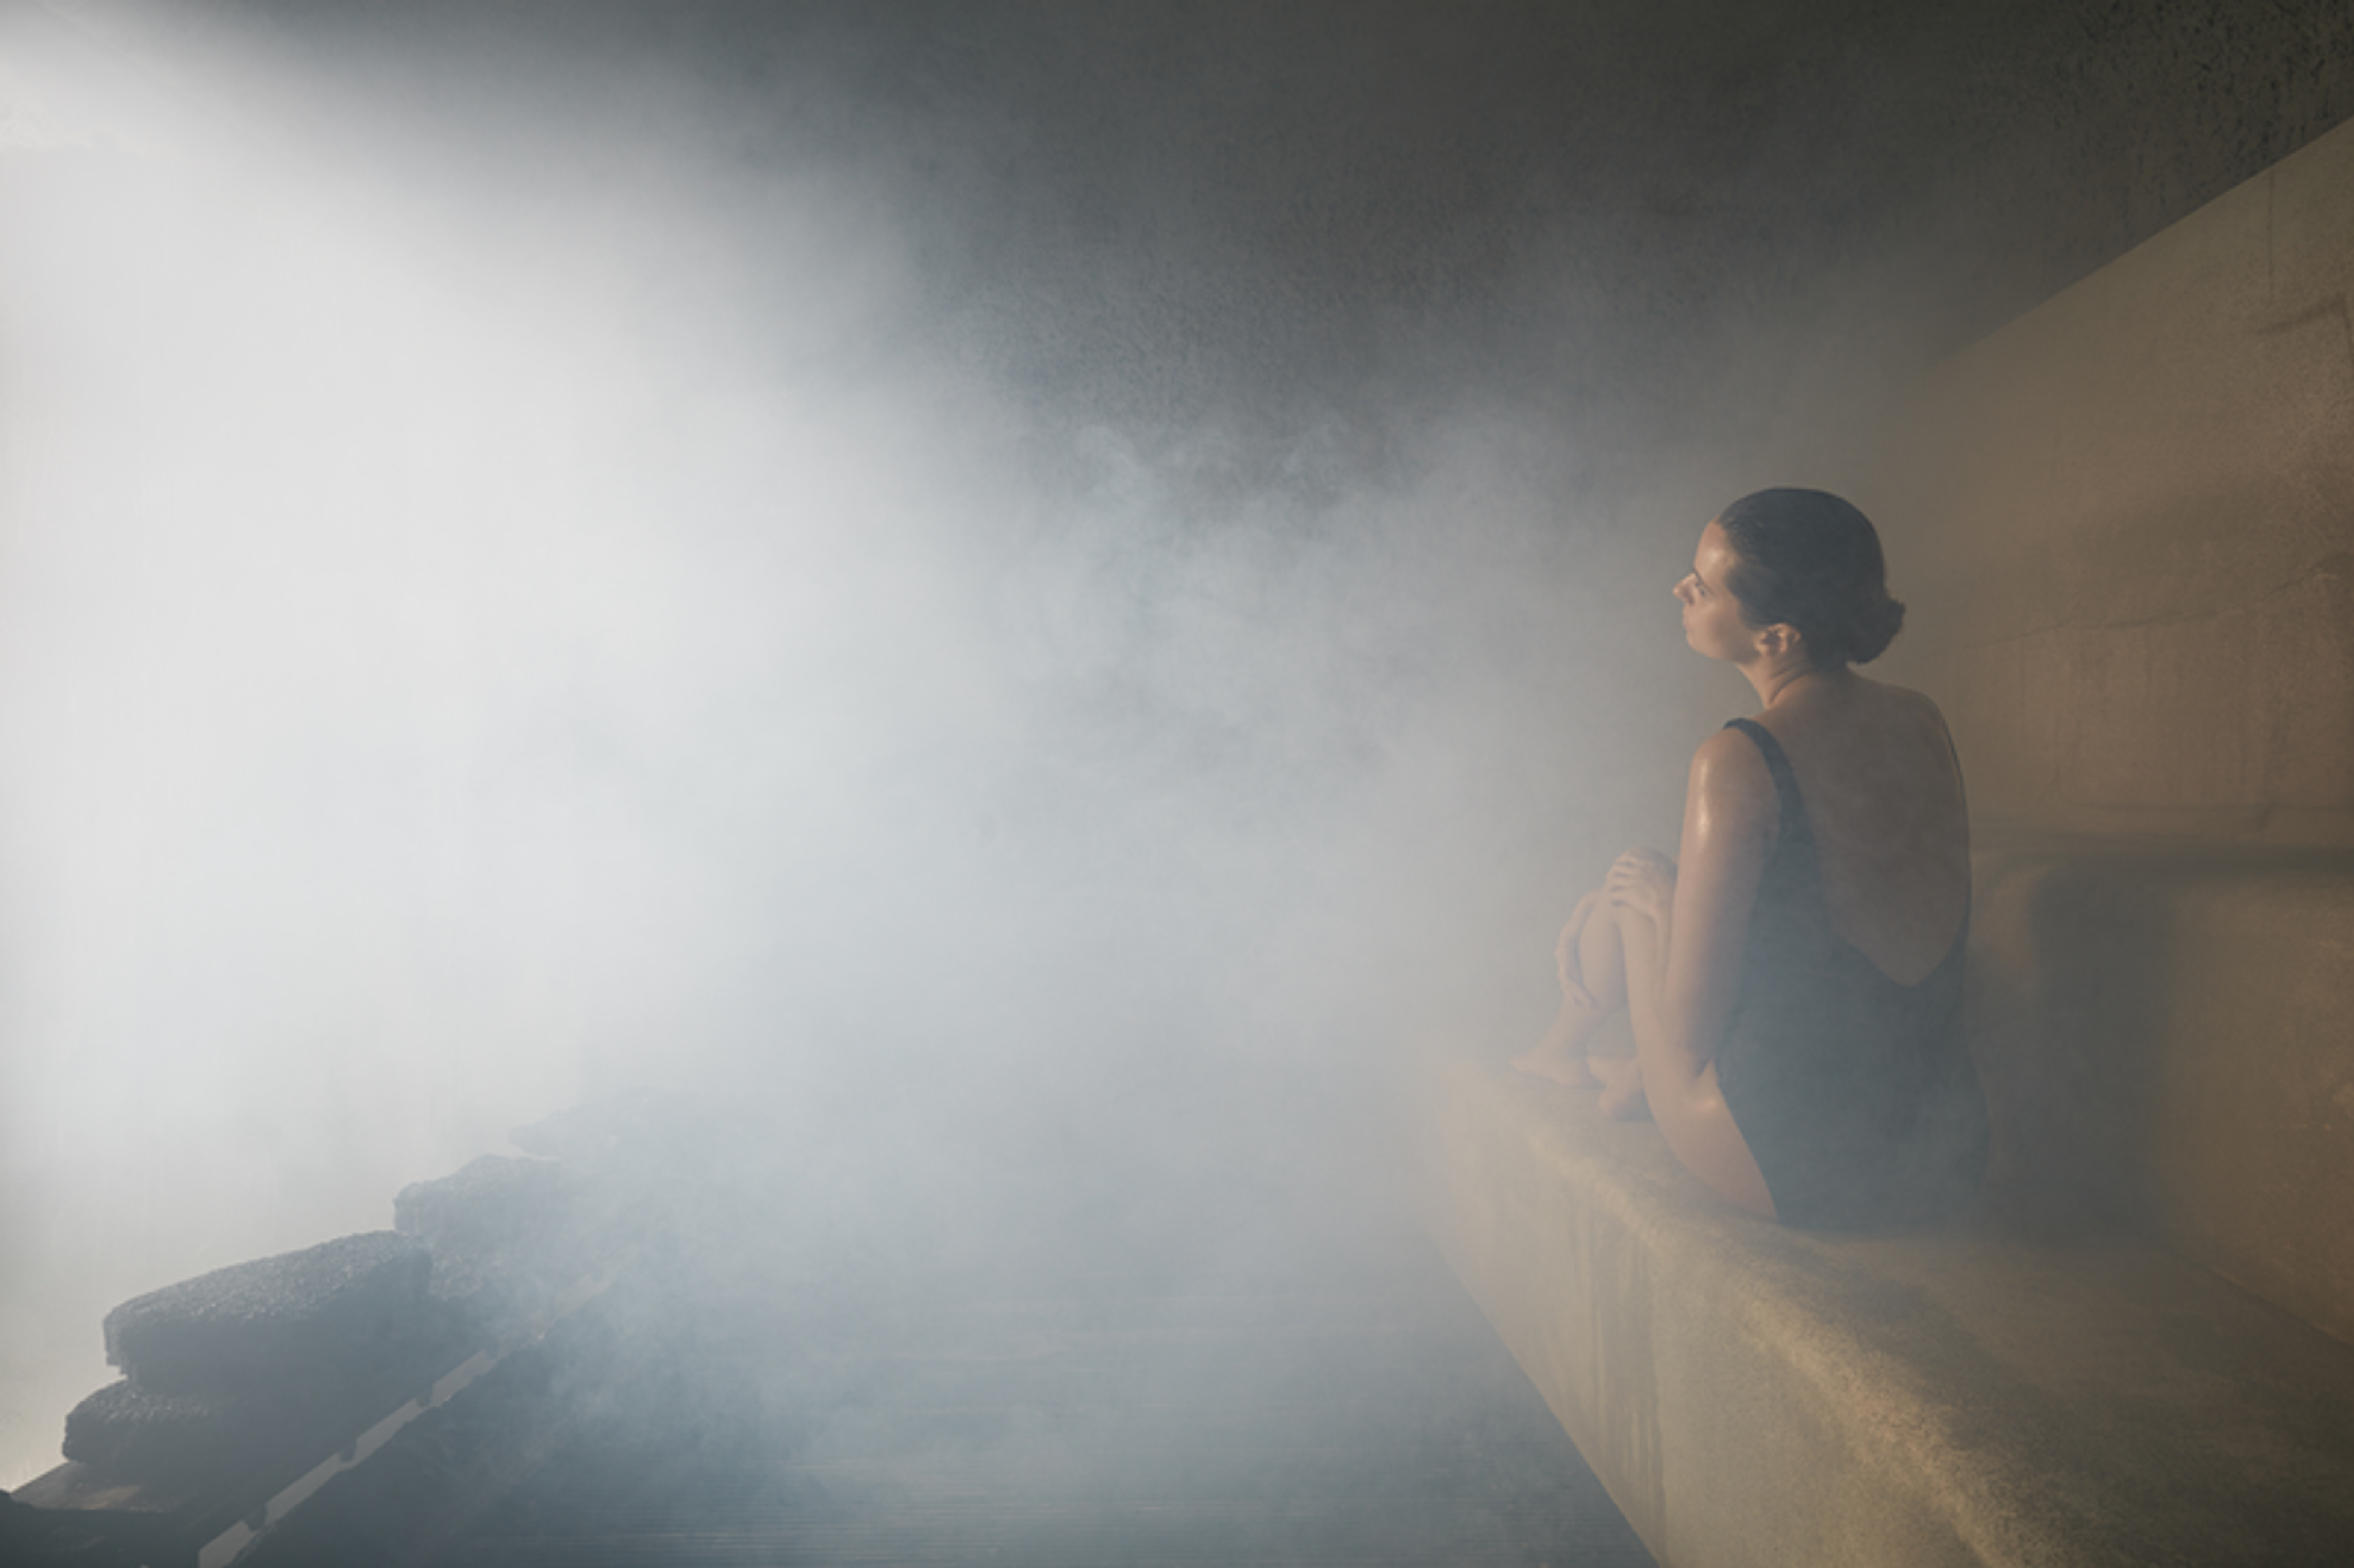 Woman relaxing in a steam room, enveloped in warm mist.